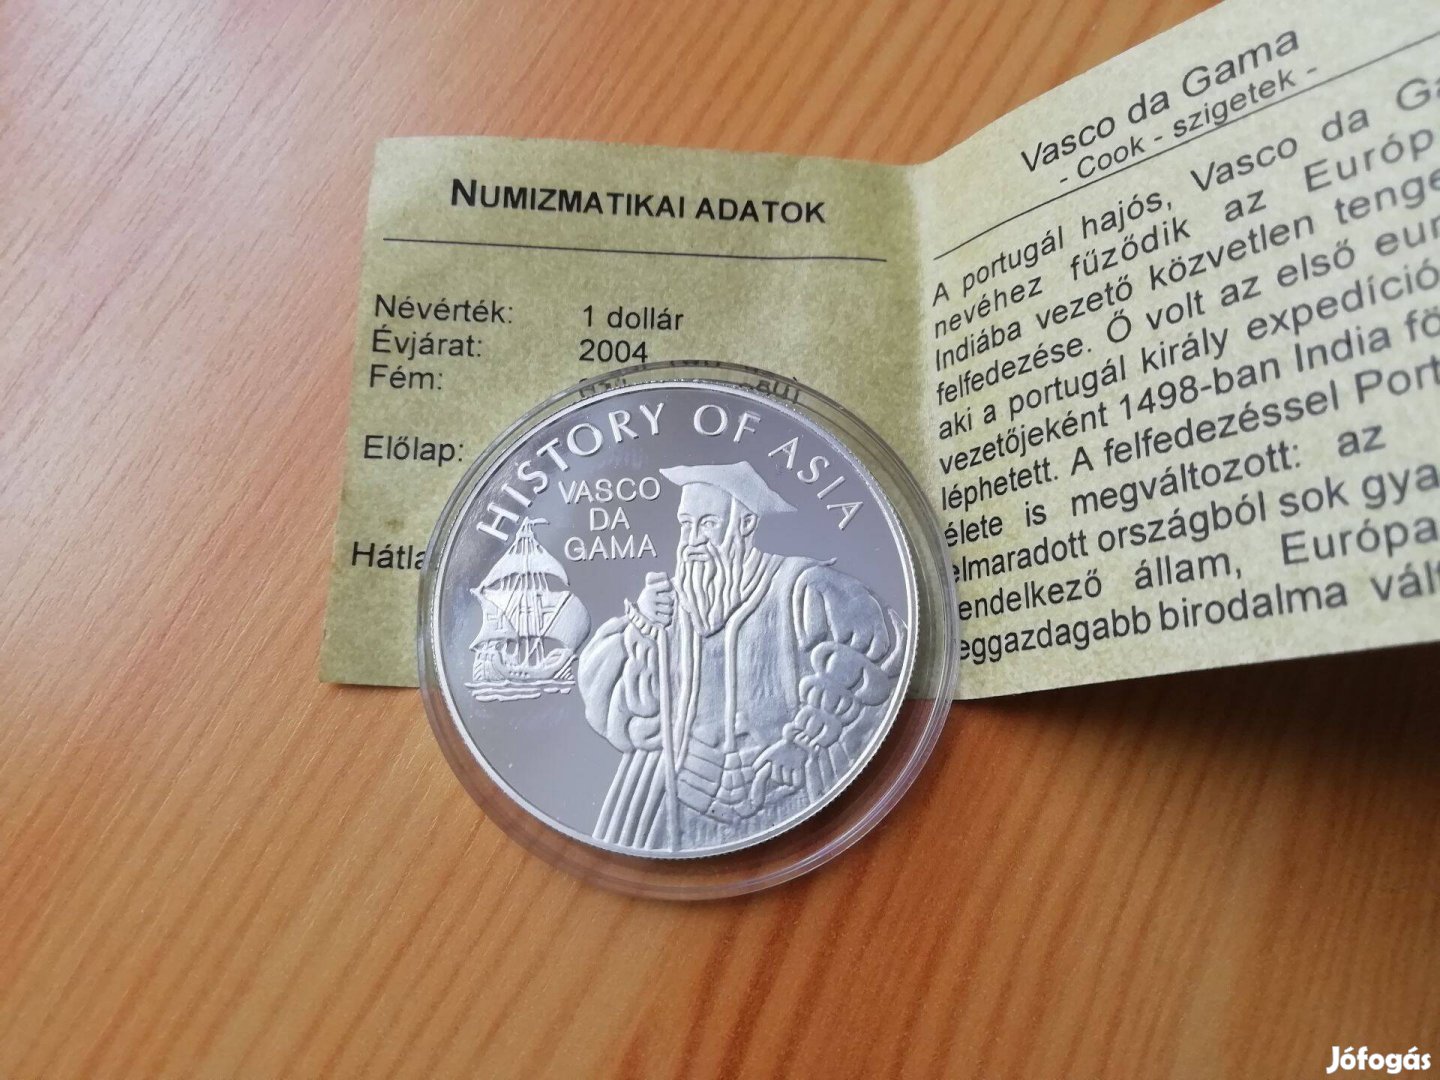 Vasco da Gama szín ezüst PP emlék 1 dollár 20 g certivel